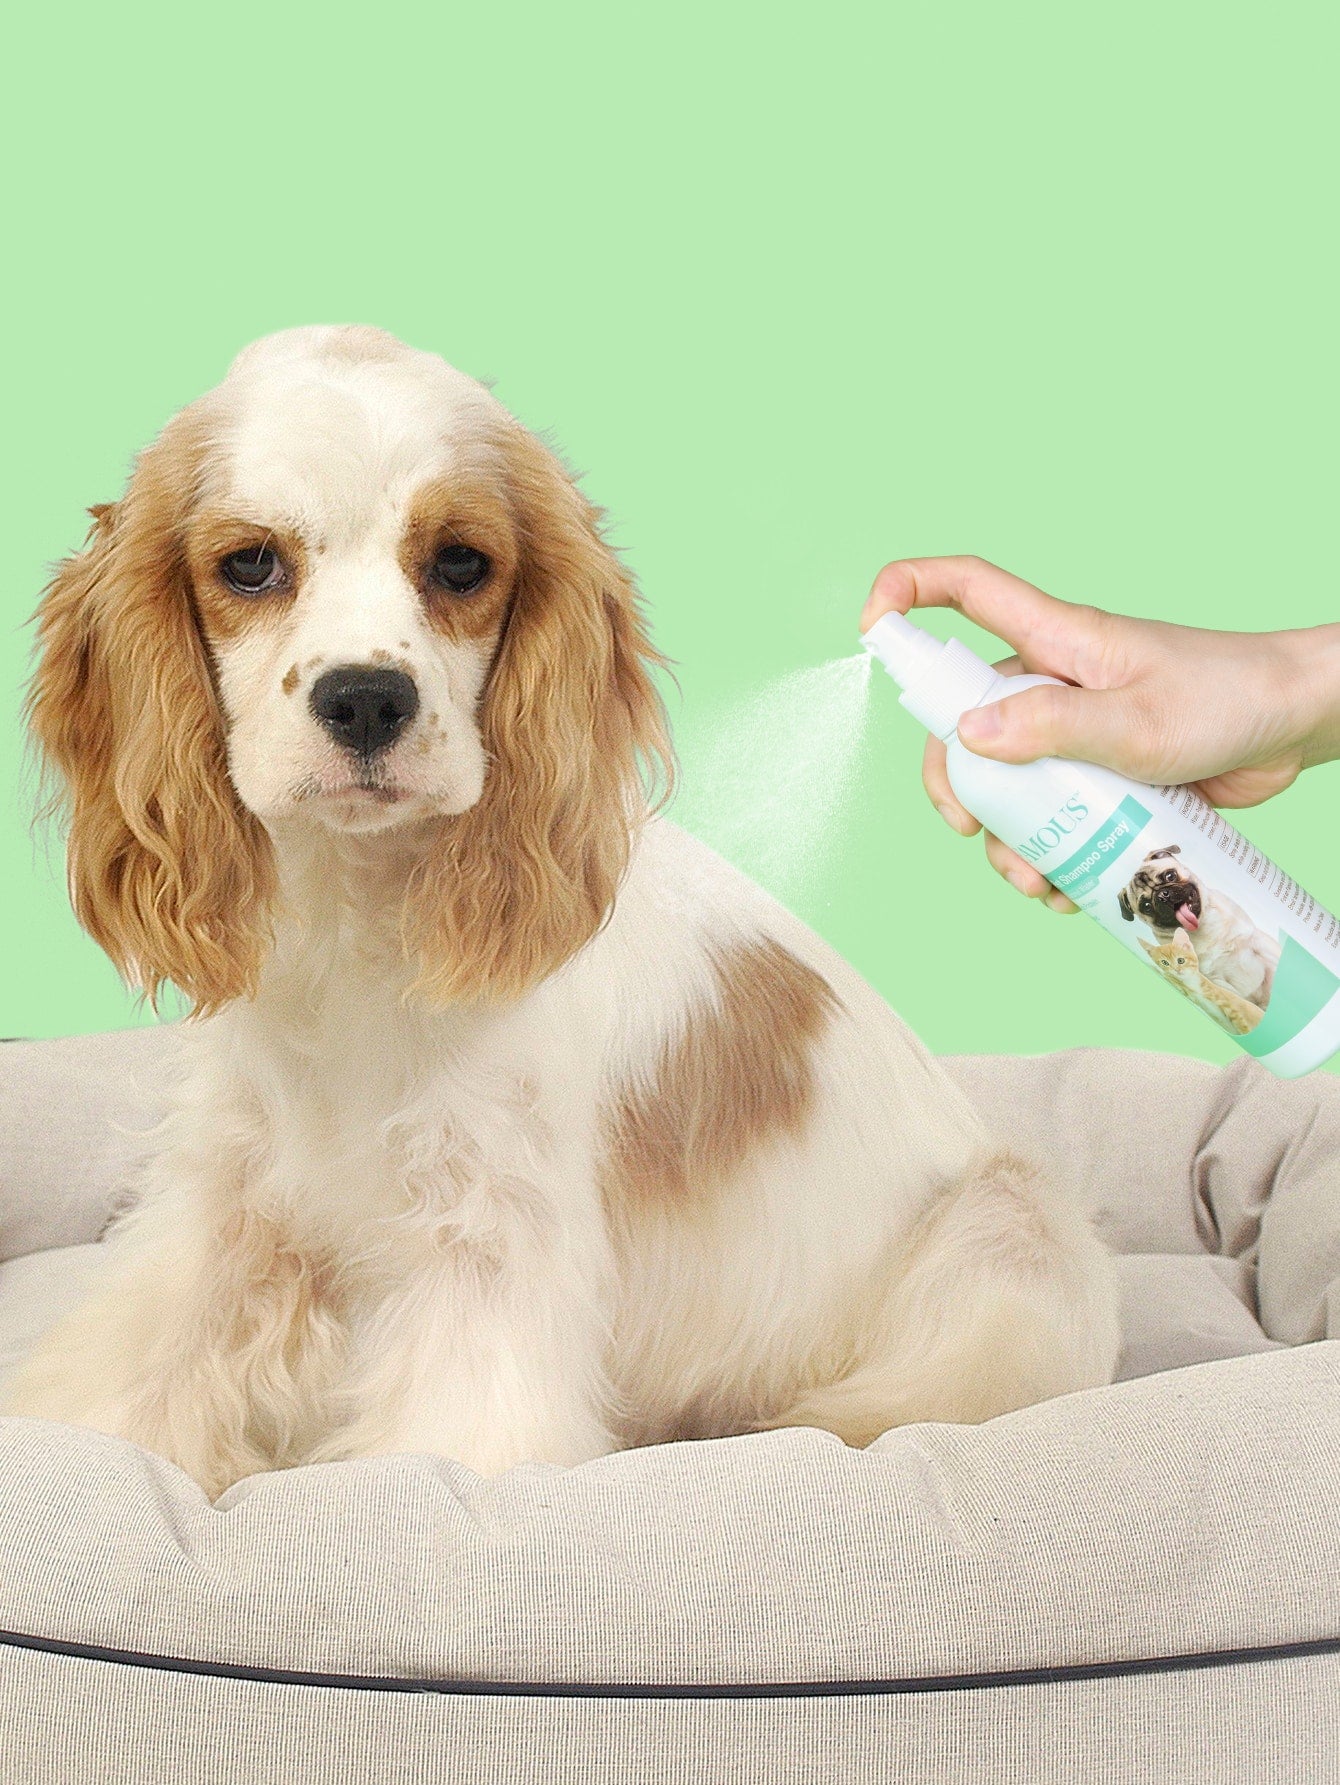 1pc 237ML Waterless Pet Shampoo Spray